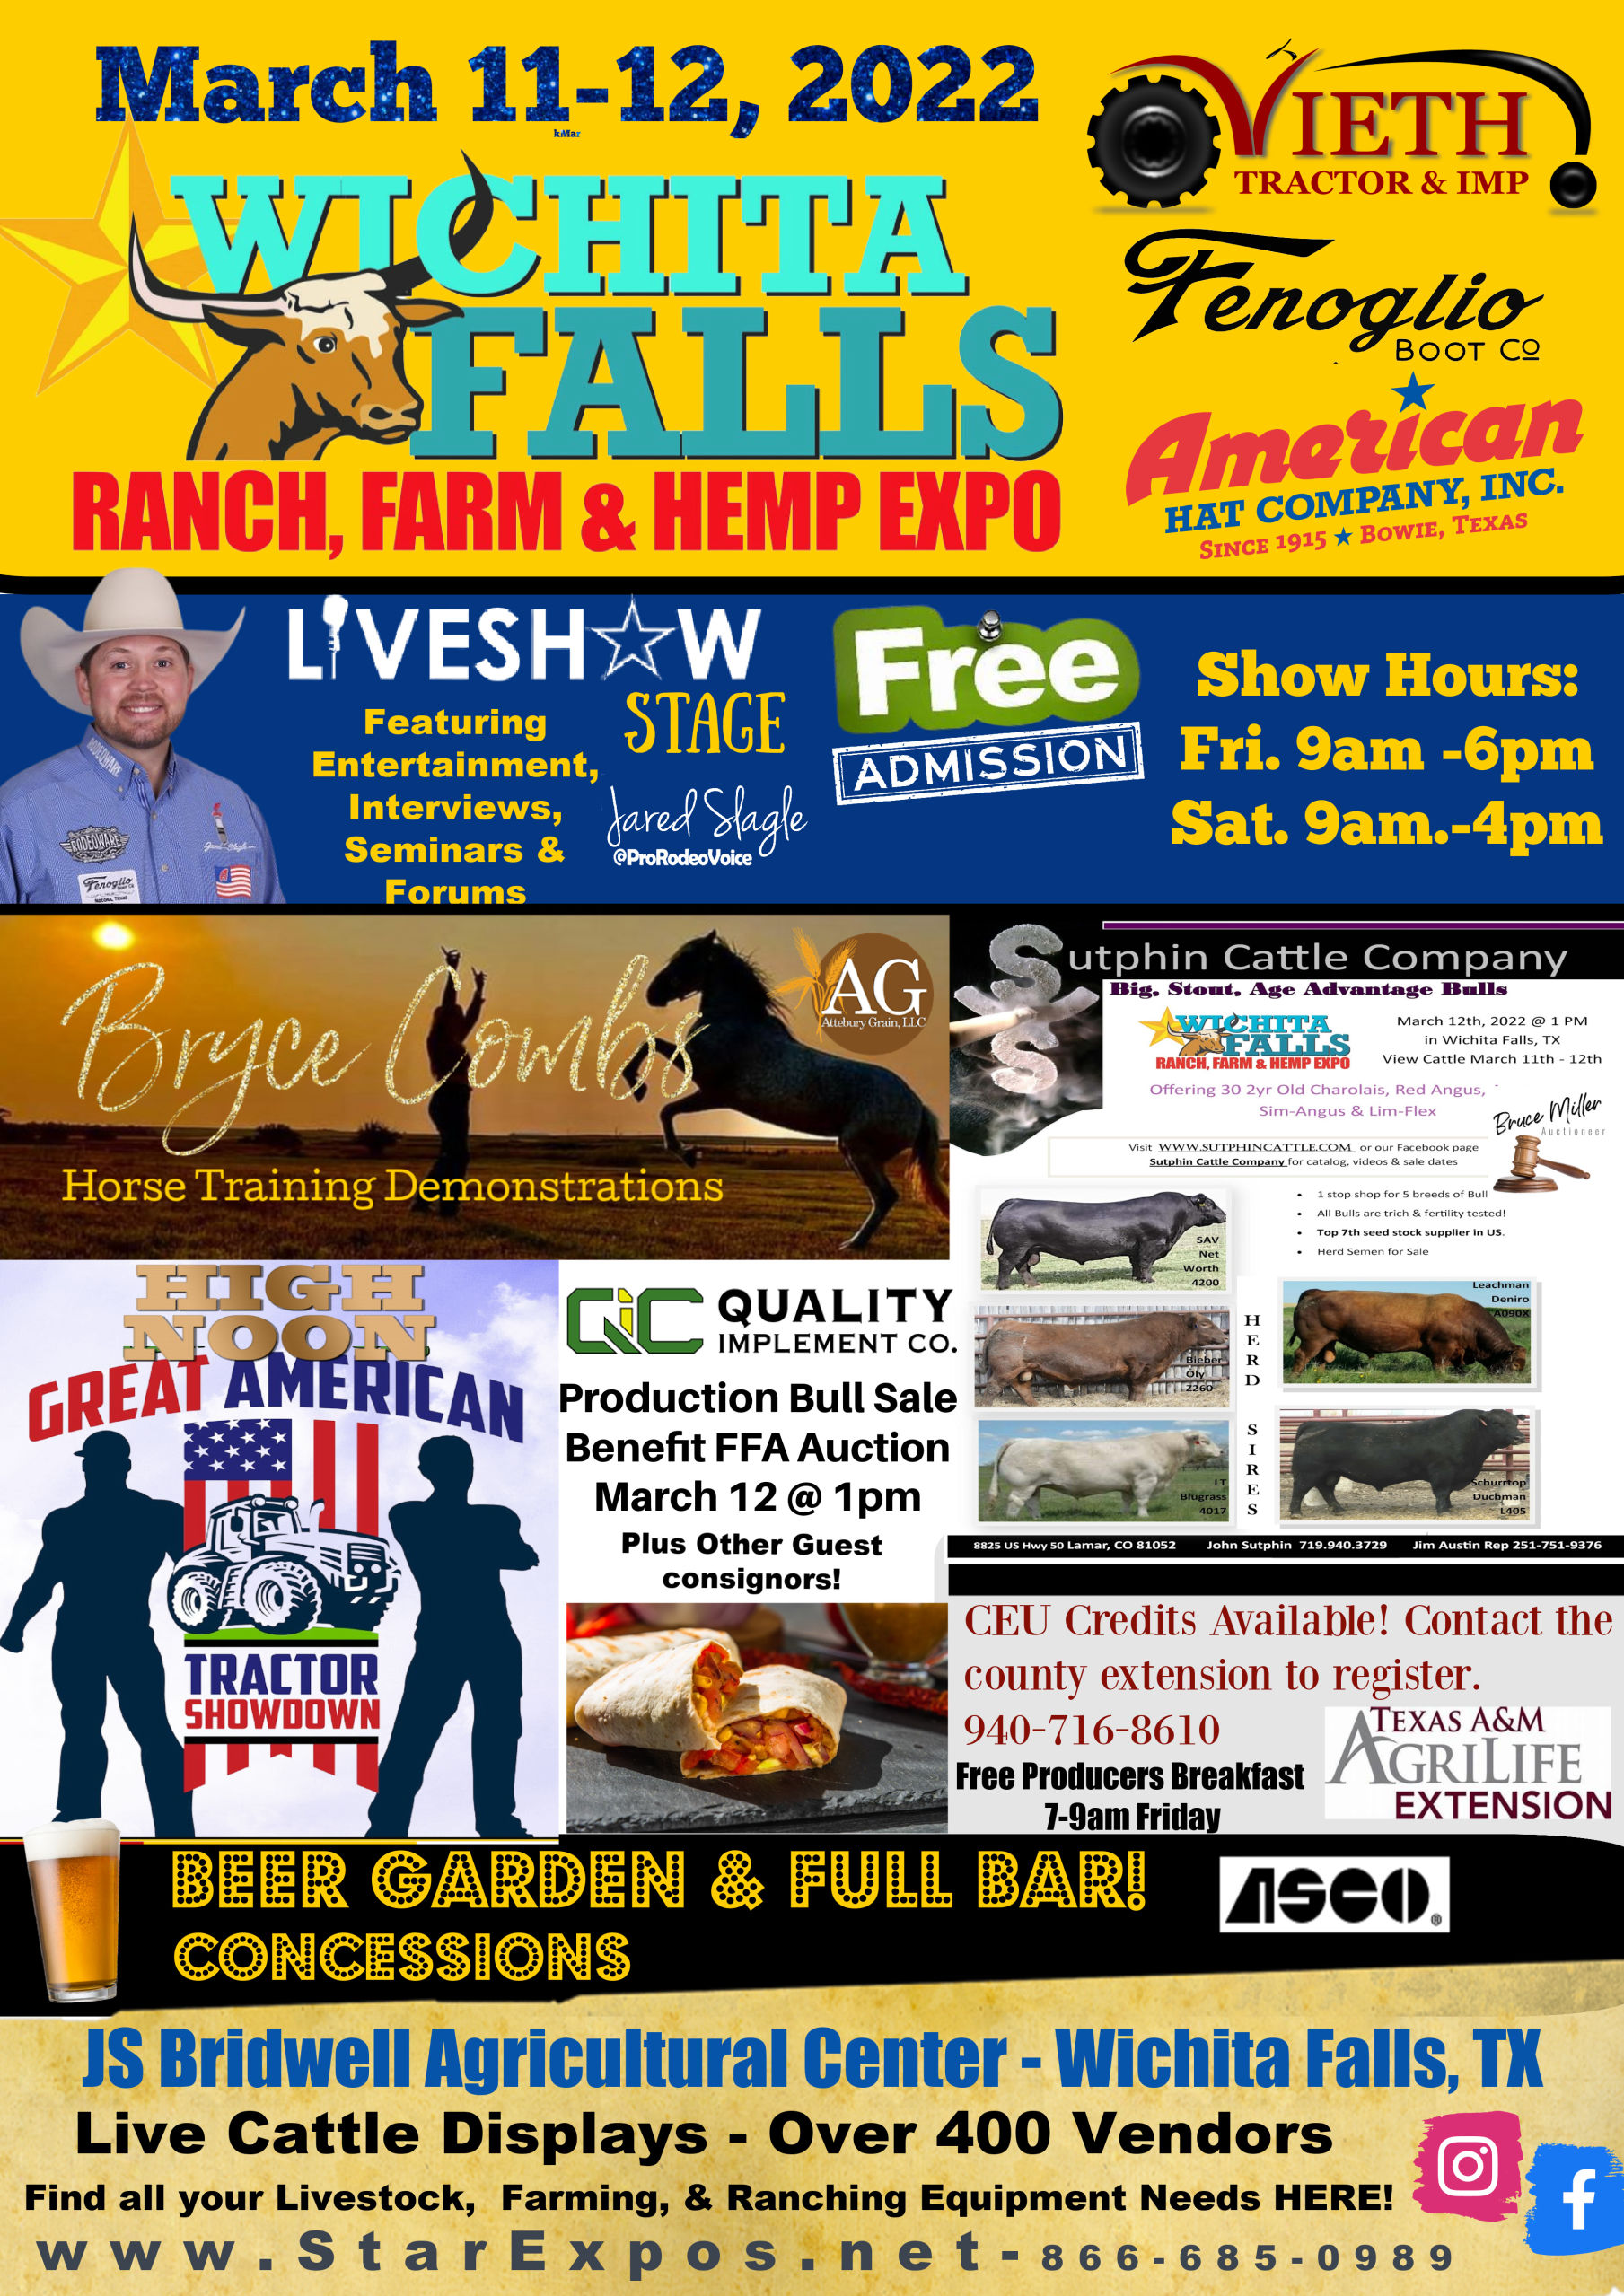 Wichita Falls Ranch, Farm & Hemp Expo Schedule